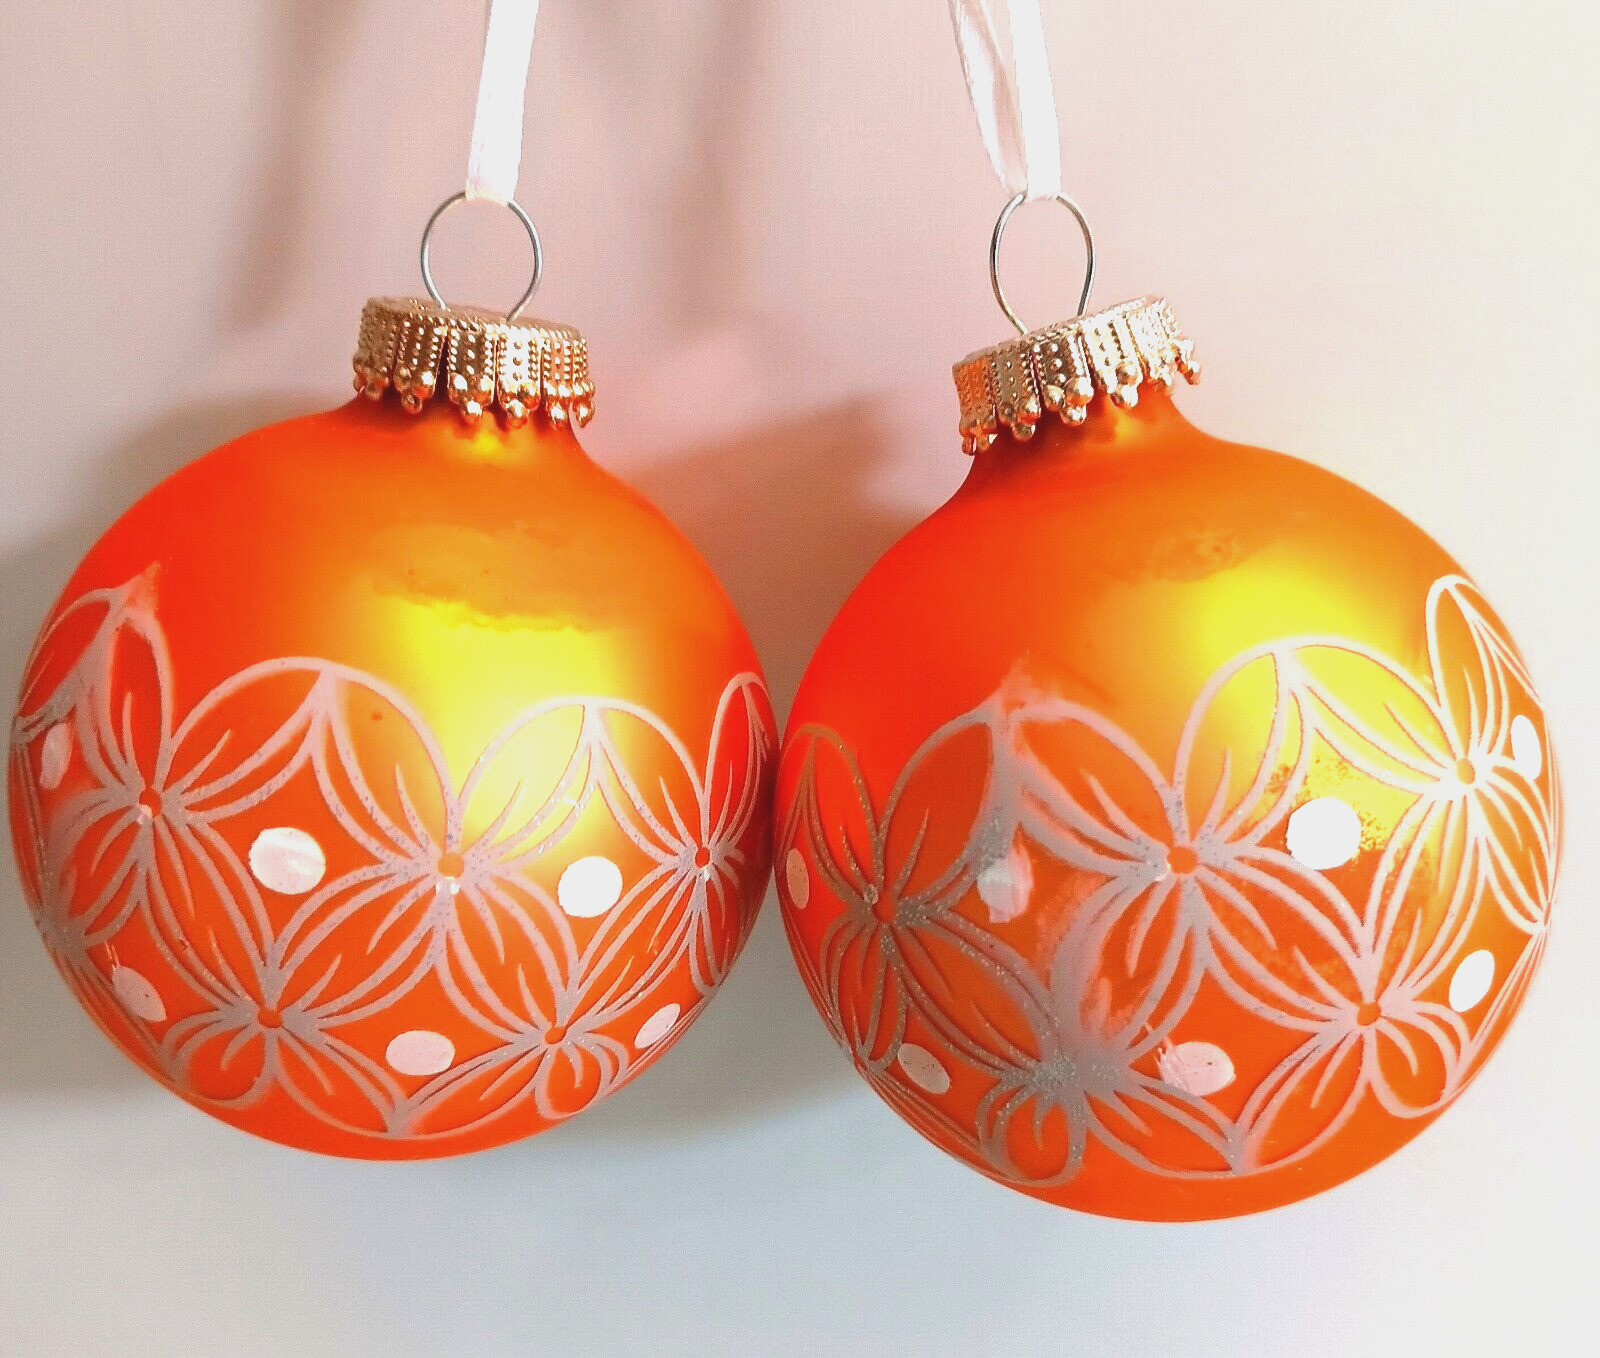 2 Vintage Orange Ball Christmas Tree Ornaments Mercury Glass Silvered interior**